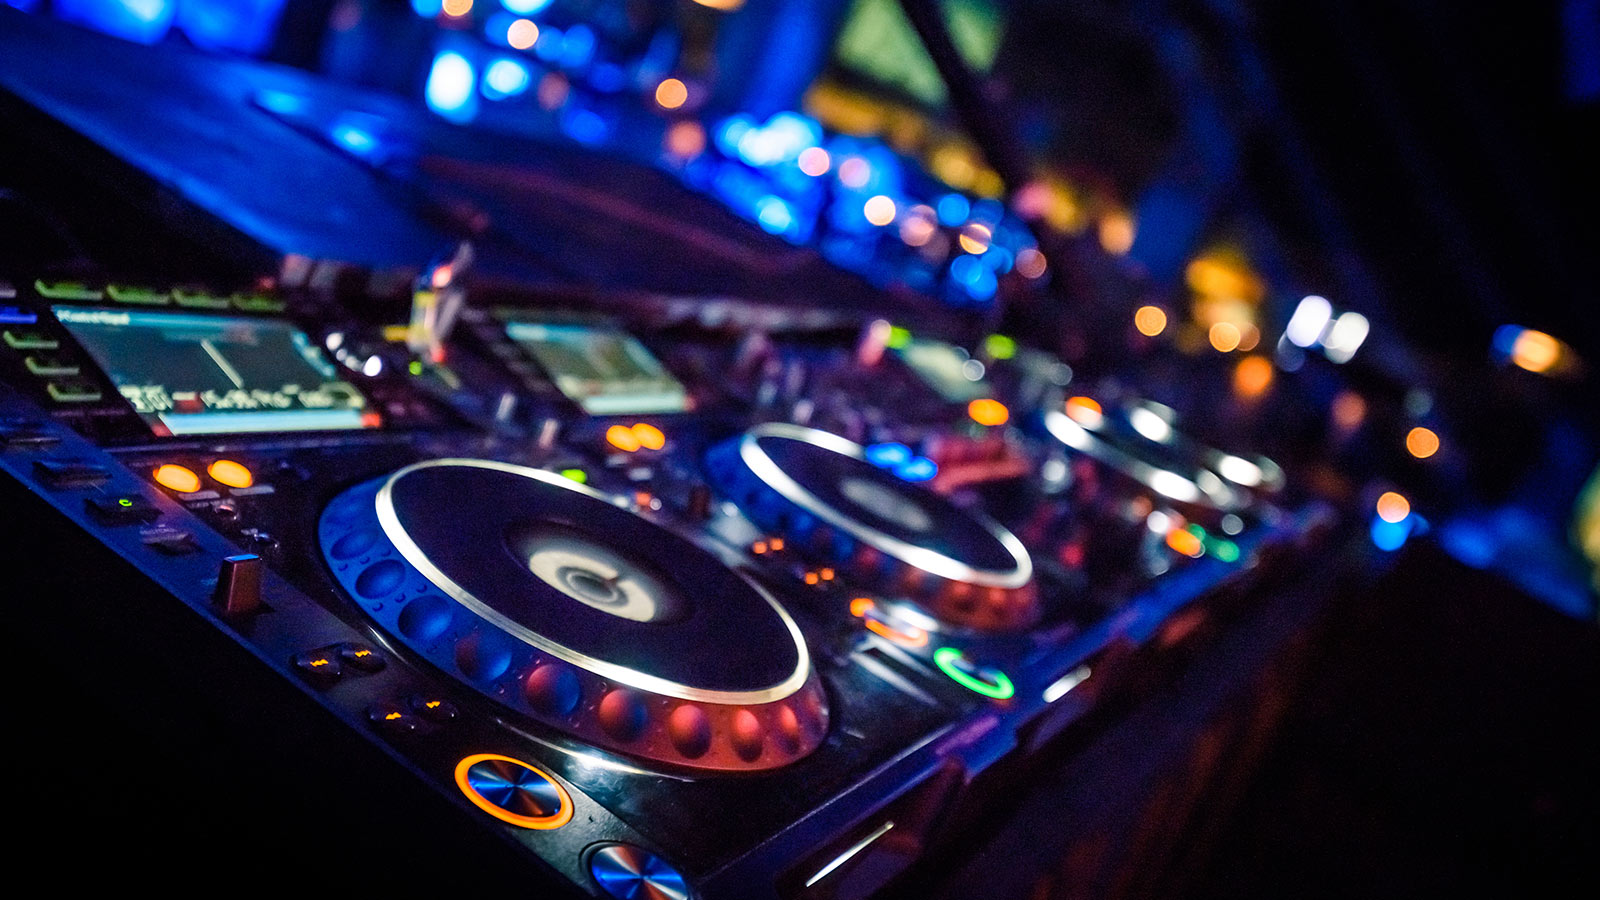 A DJ deck in a night club.